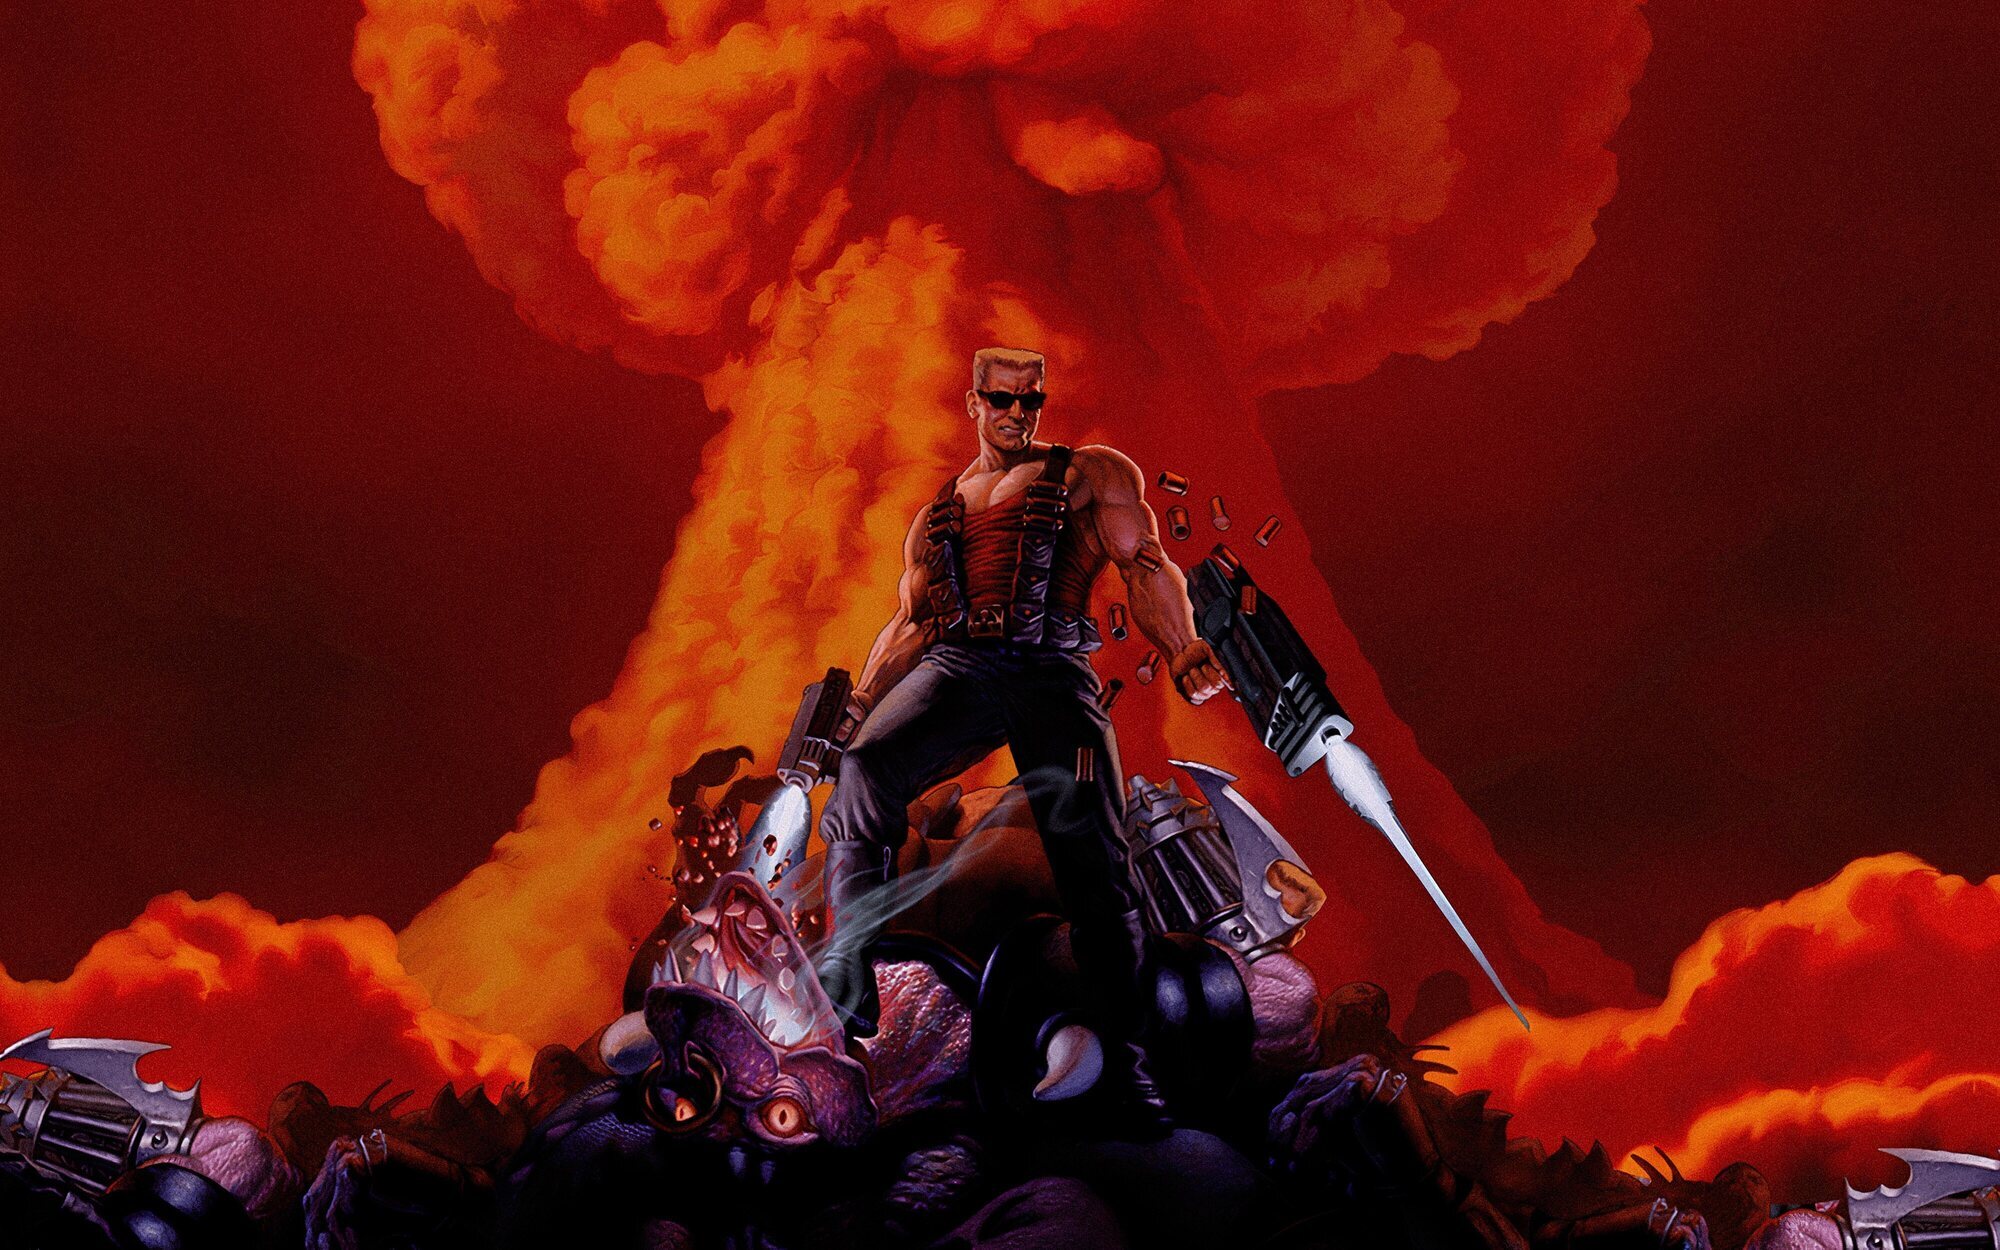 'Duke Nukem' vuelve para protagonizar su propia película con Legendary Entertainment